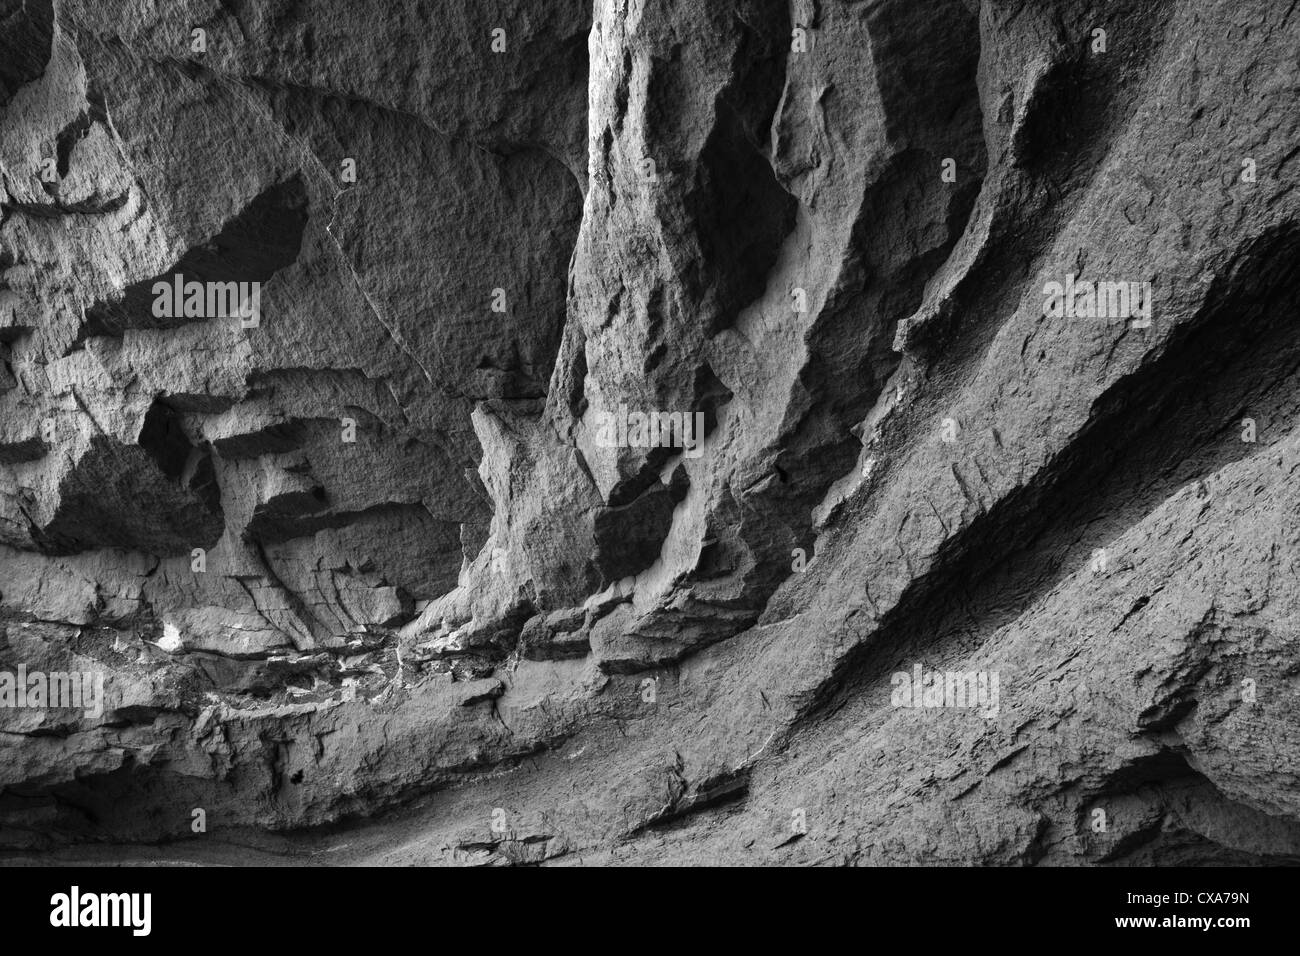 Black and white image of eroded sandstone. Stock Photo